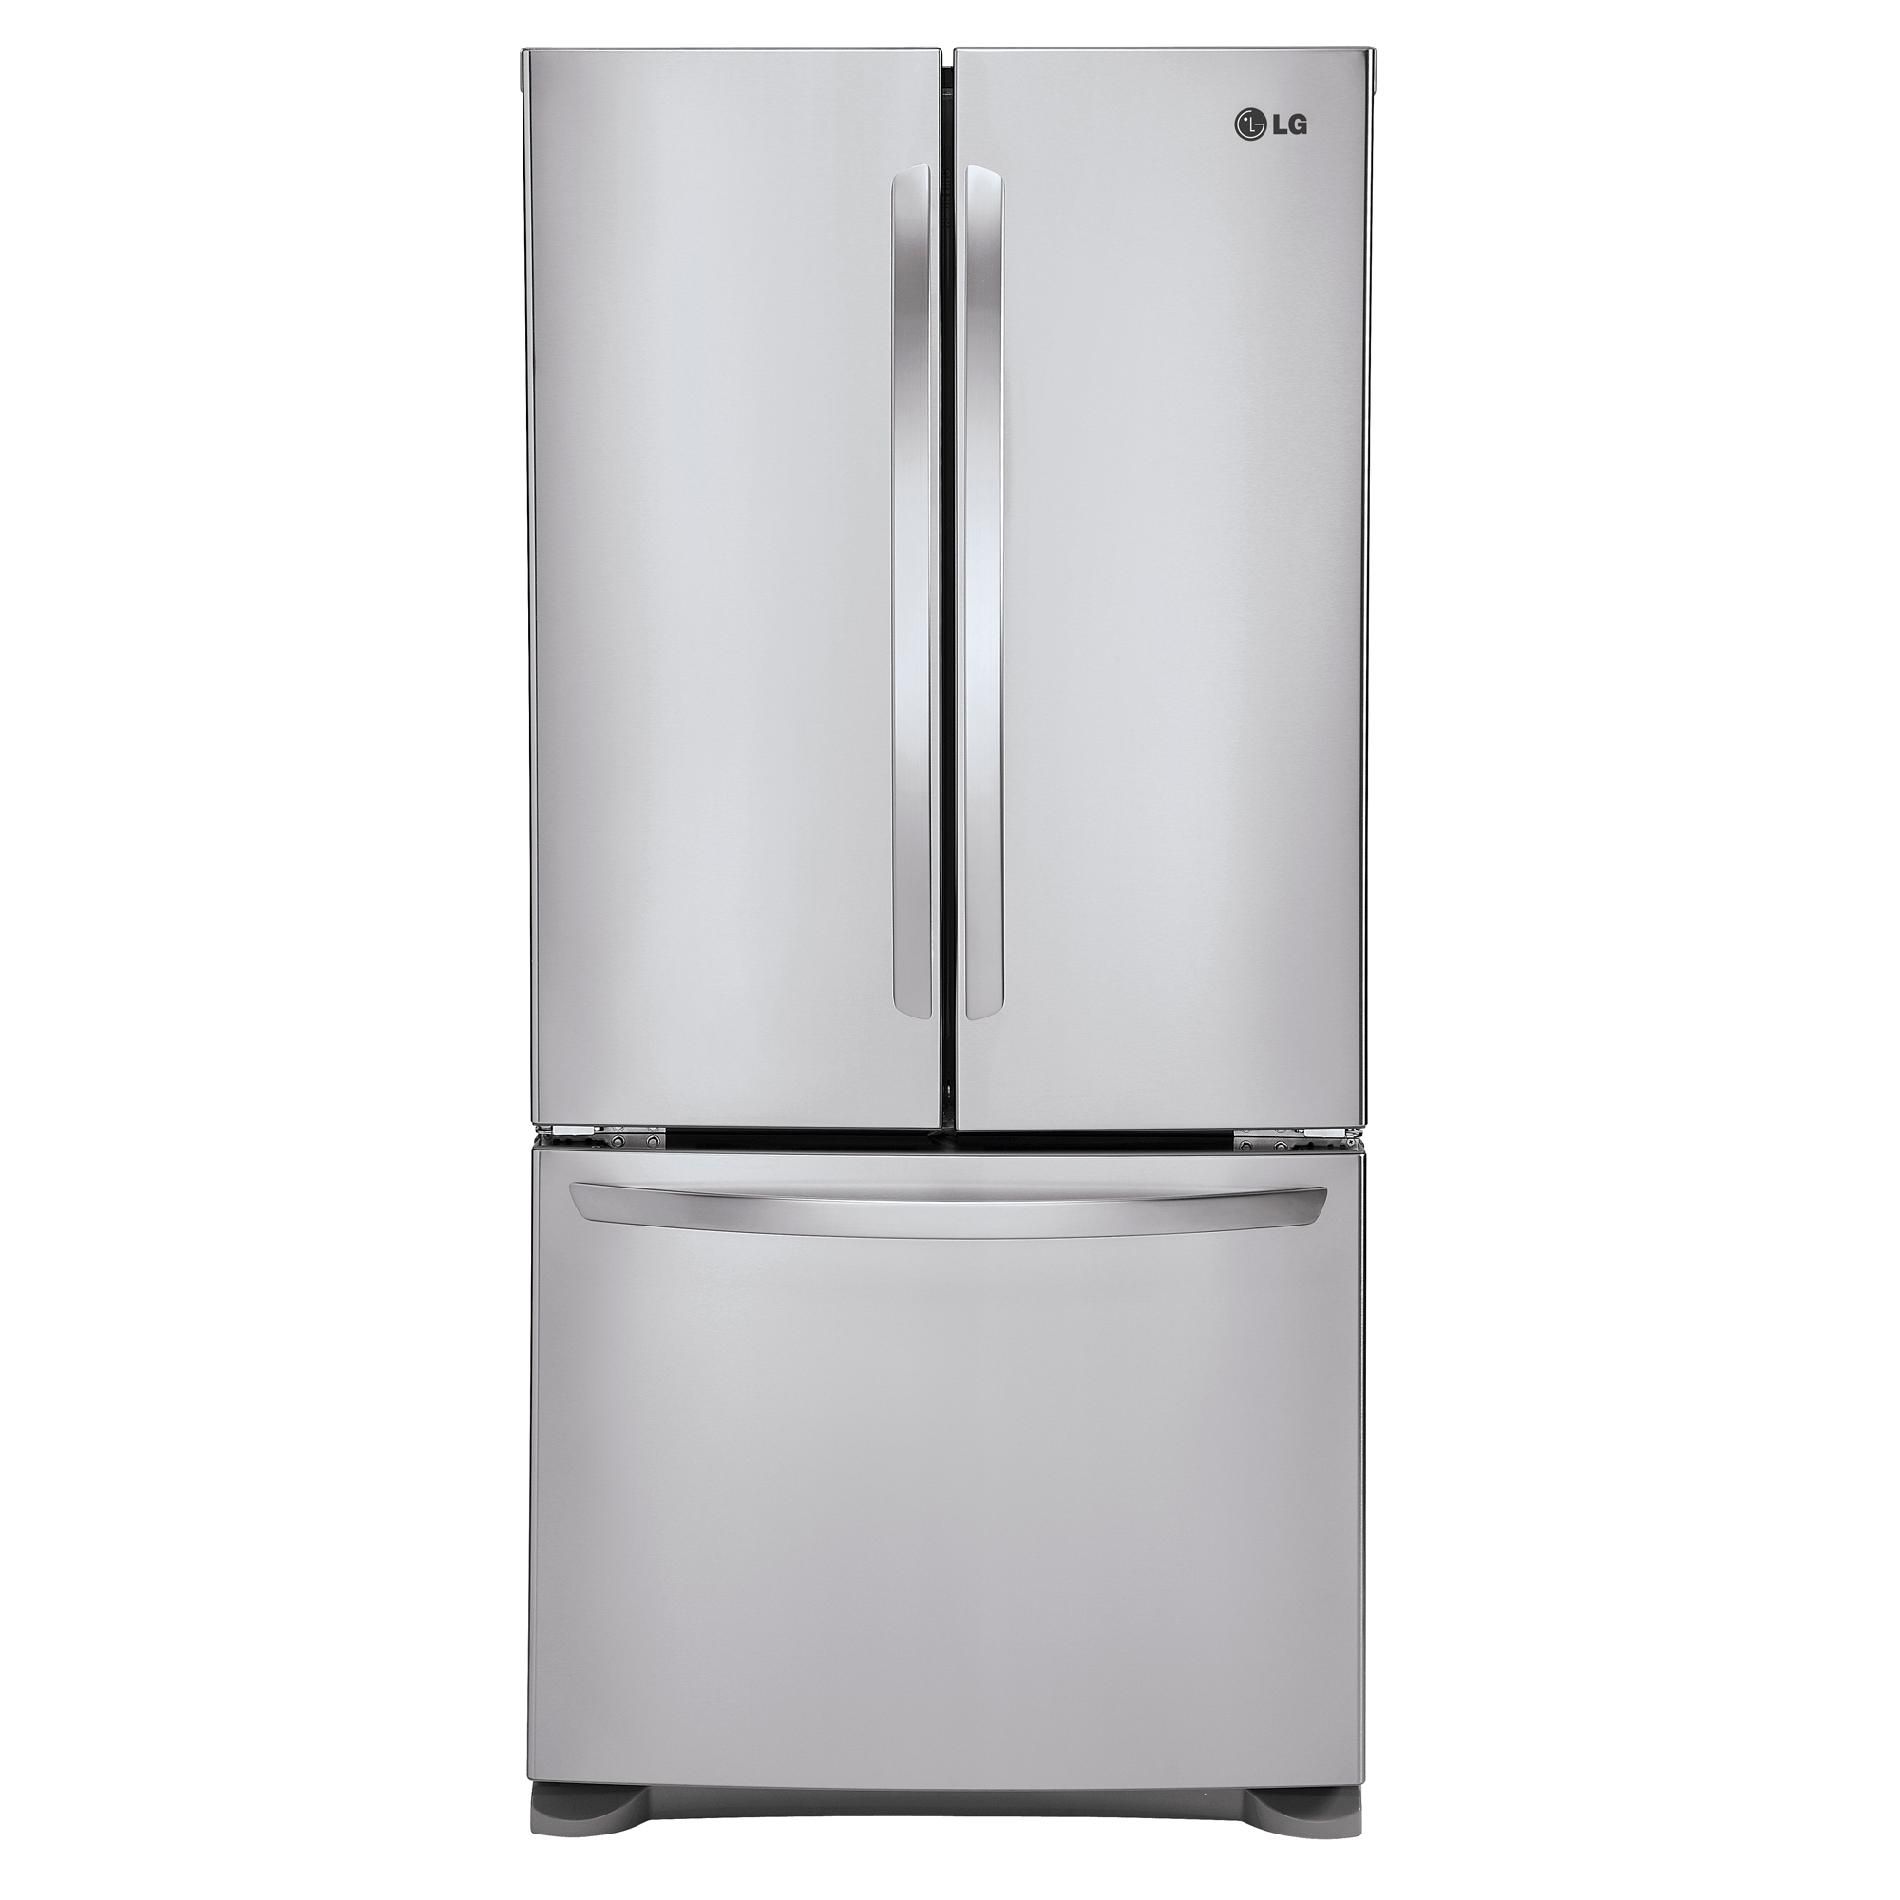 LG 24.9 cu. ft. French Door Bottom-Freezer Refrigerator - Stainless Steel